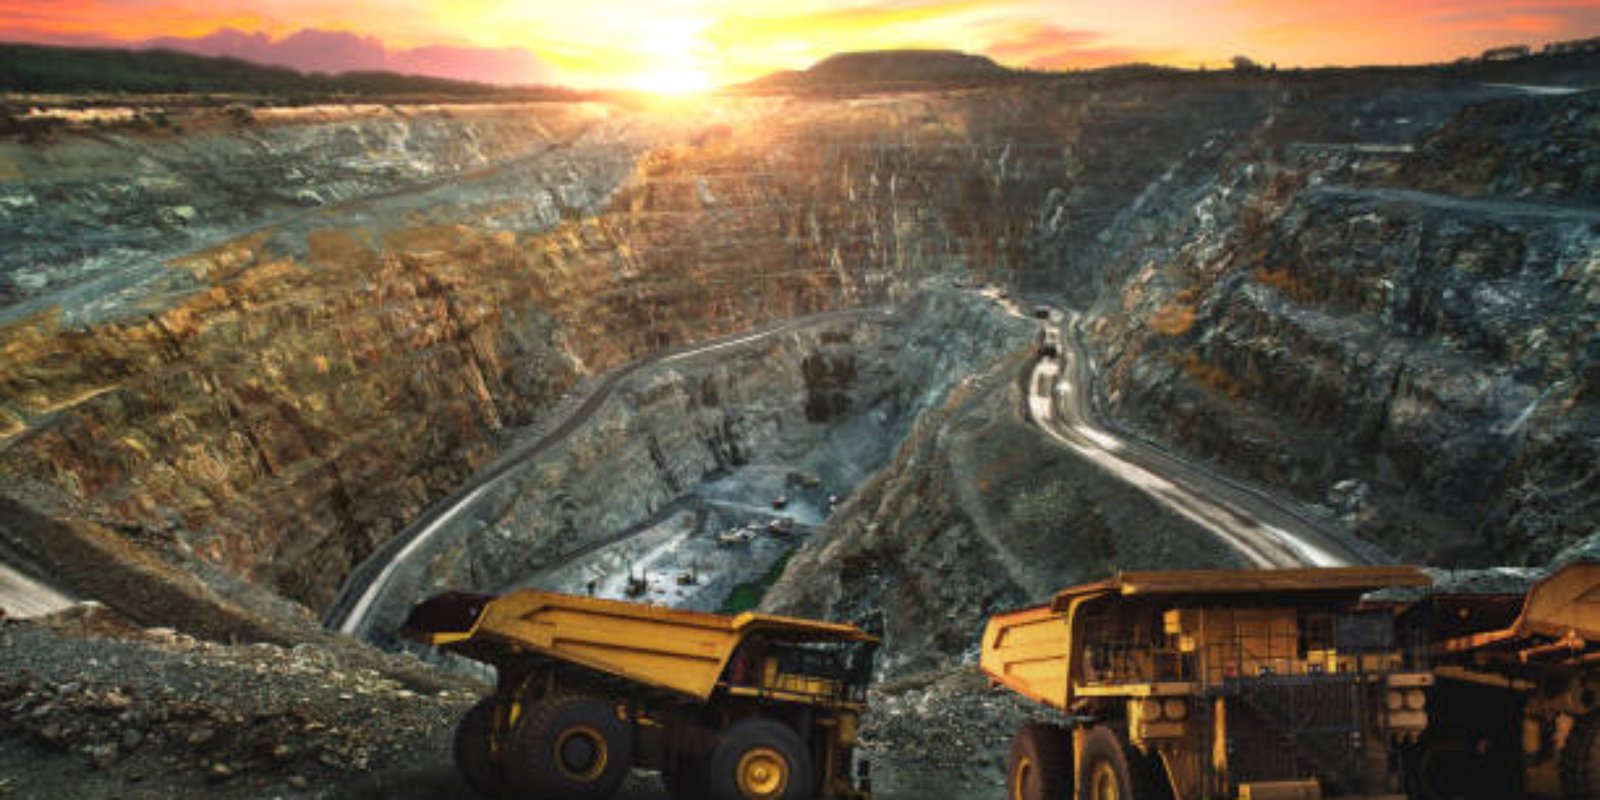 Big dump truck loading for transport minerals gold,Mining industrial at Thailand